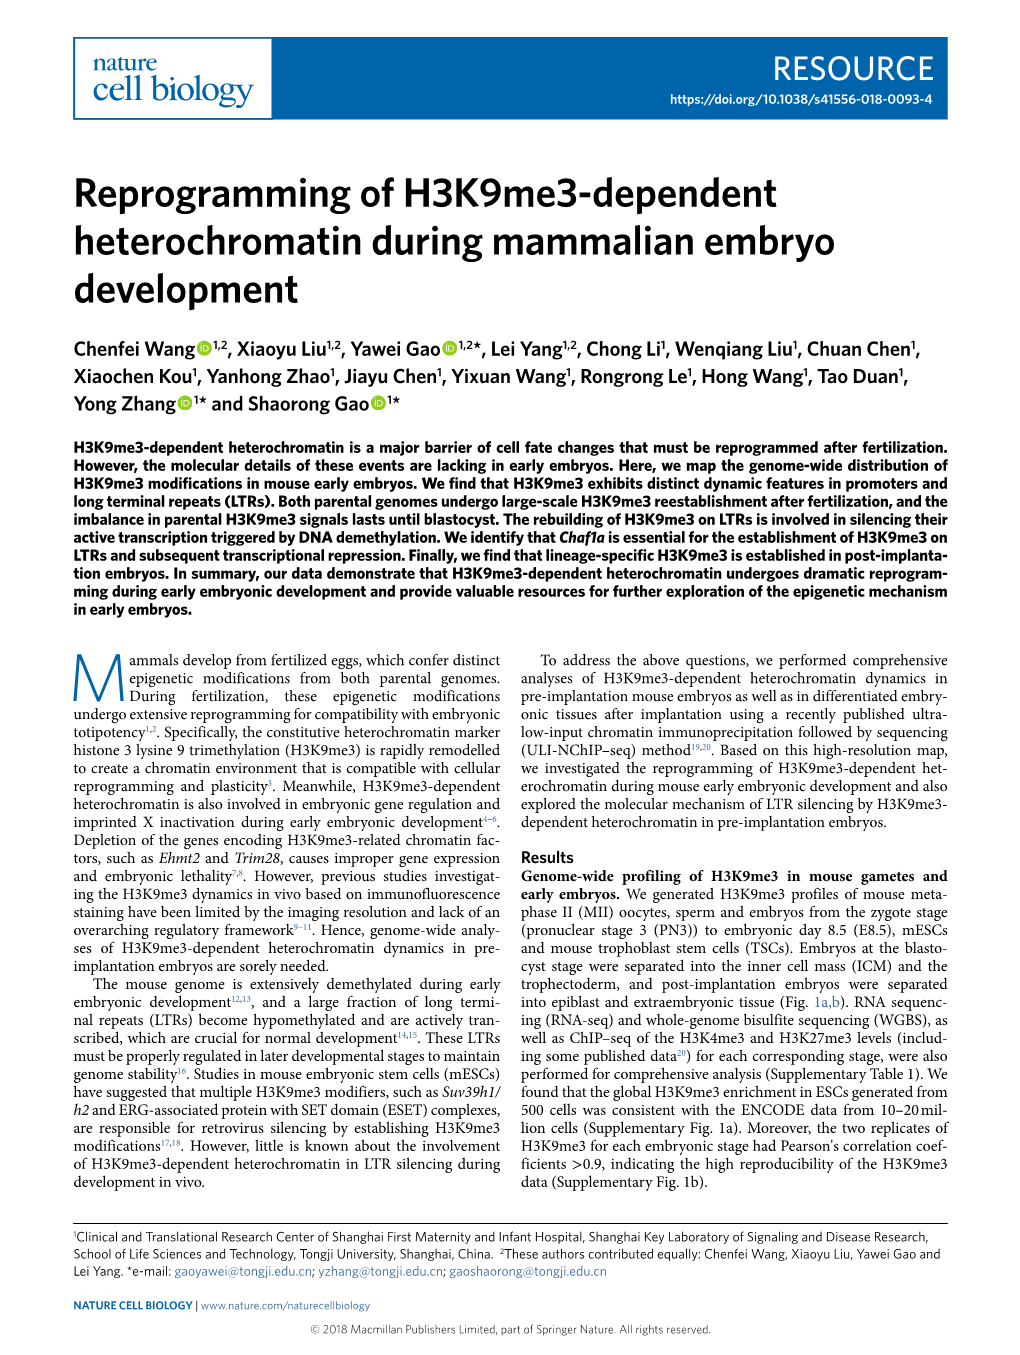 Reprogramming of H3k9me3-Dependent Heterochromatin During Mammalian Embryo Development